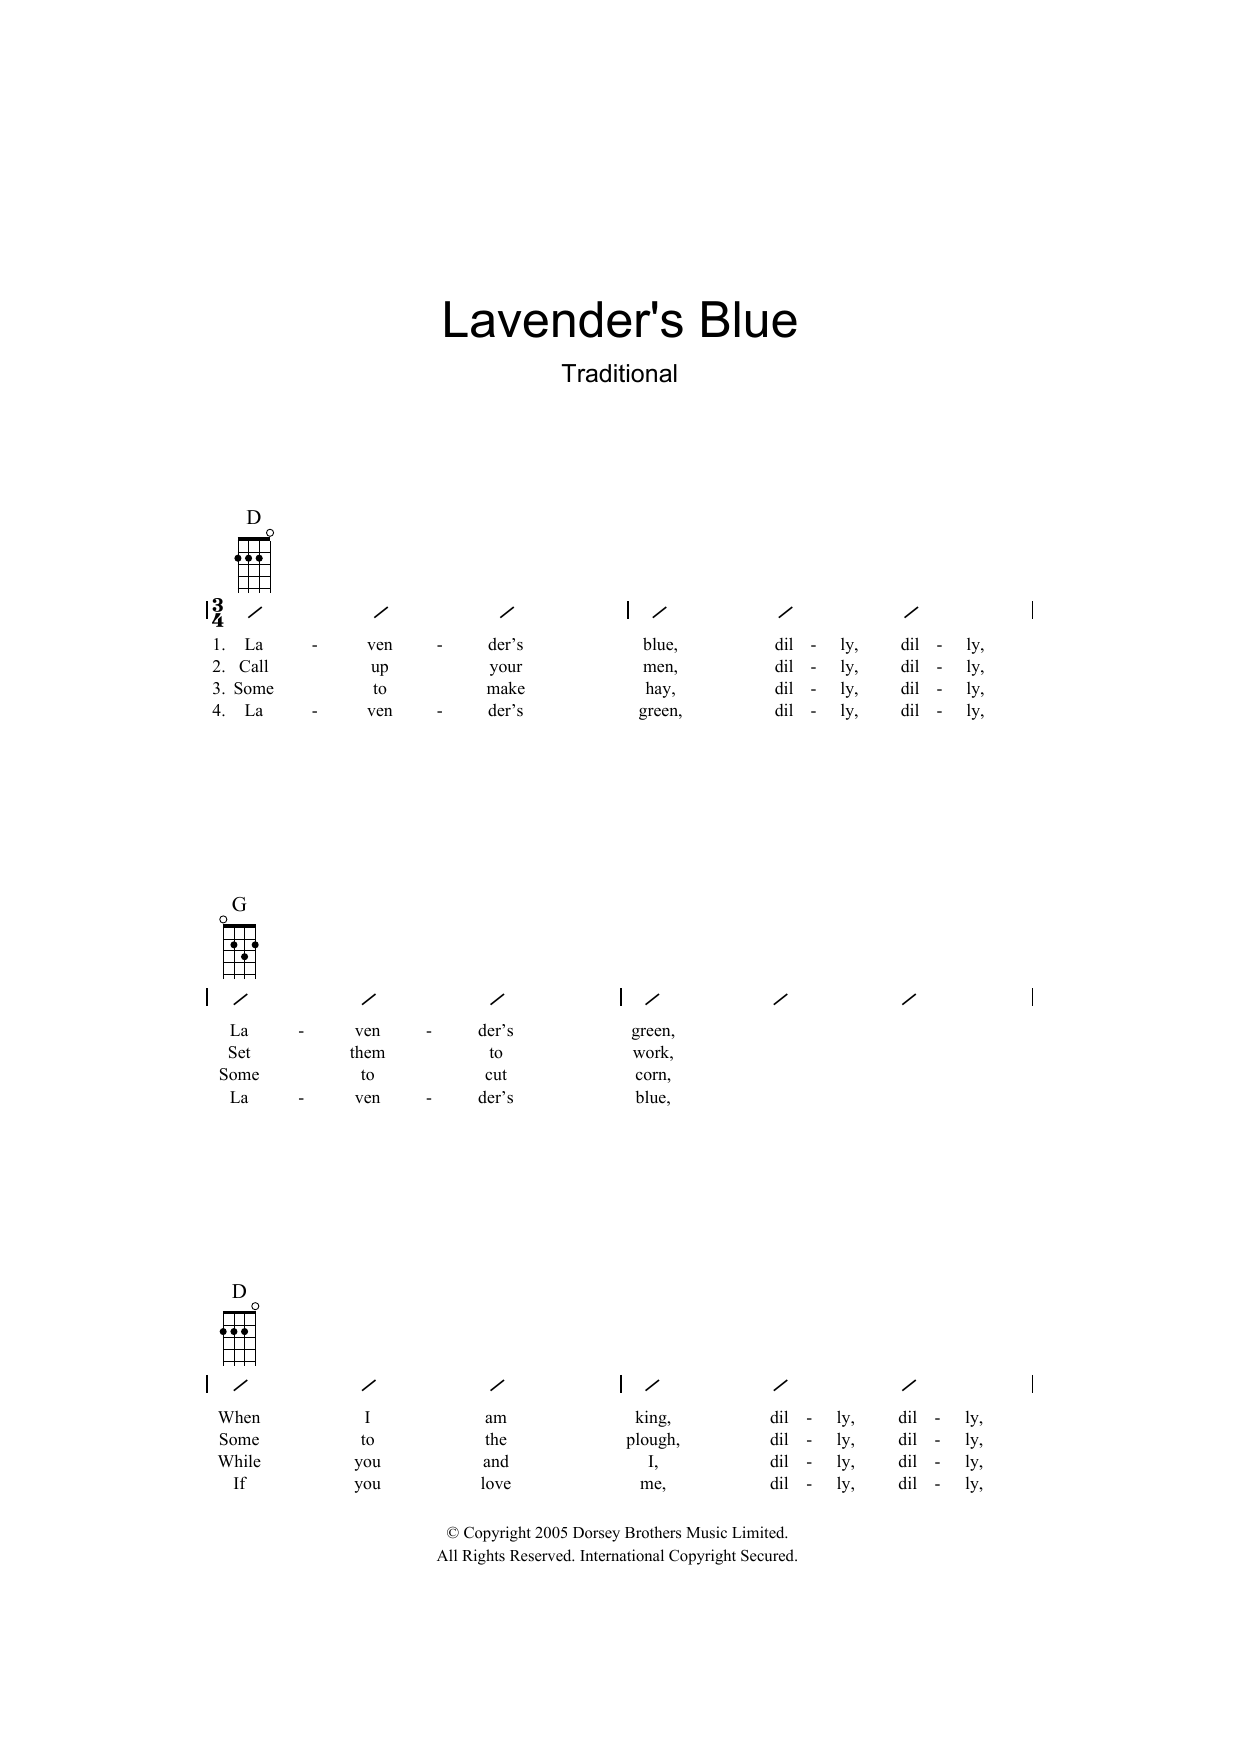 Traditional Lavender's Blue sheet music notes and chords arranged for Ukulele Chords/Lyrics